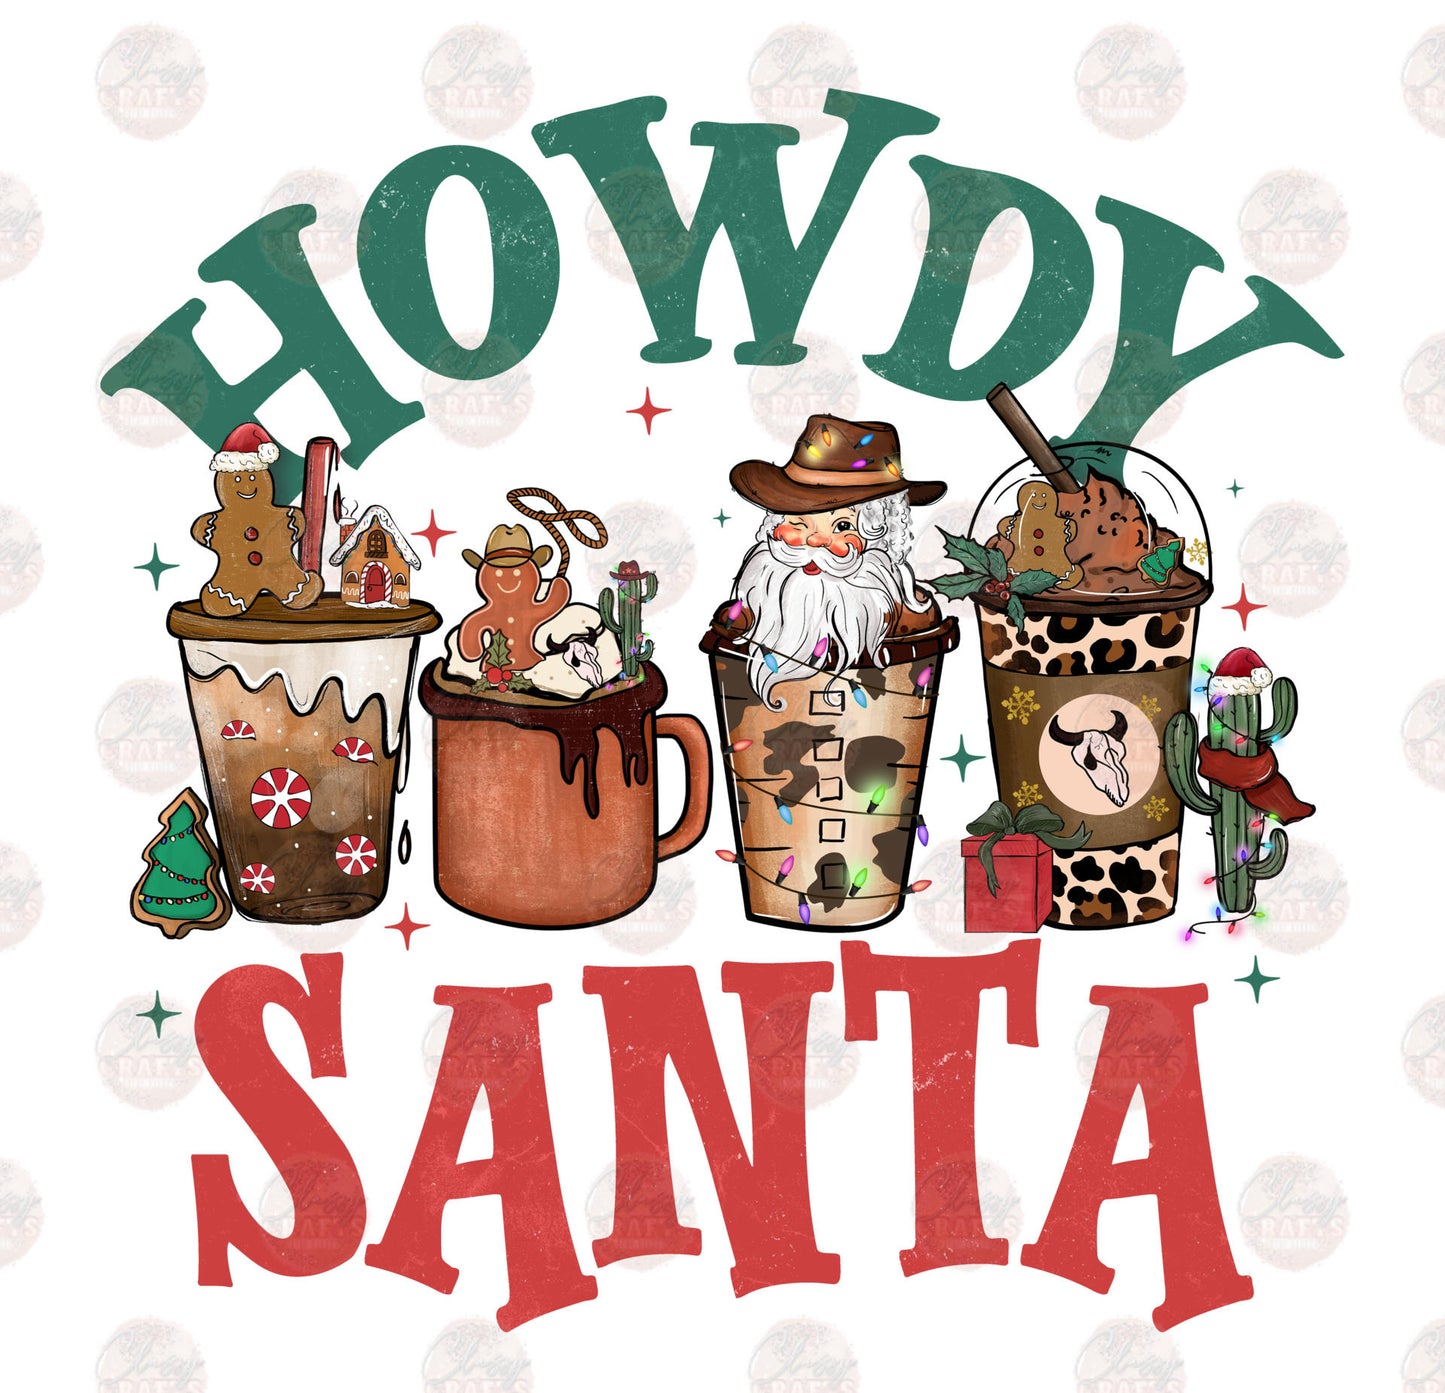 Howdy Santa Coffee - Sublimation Transfer